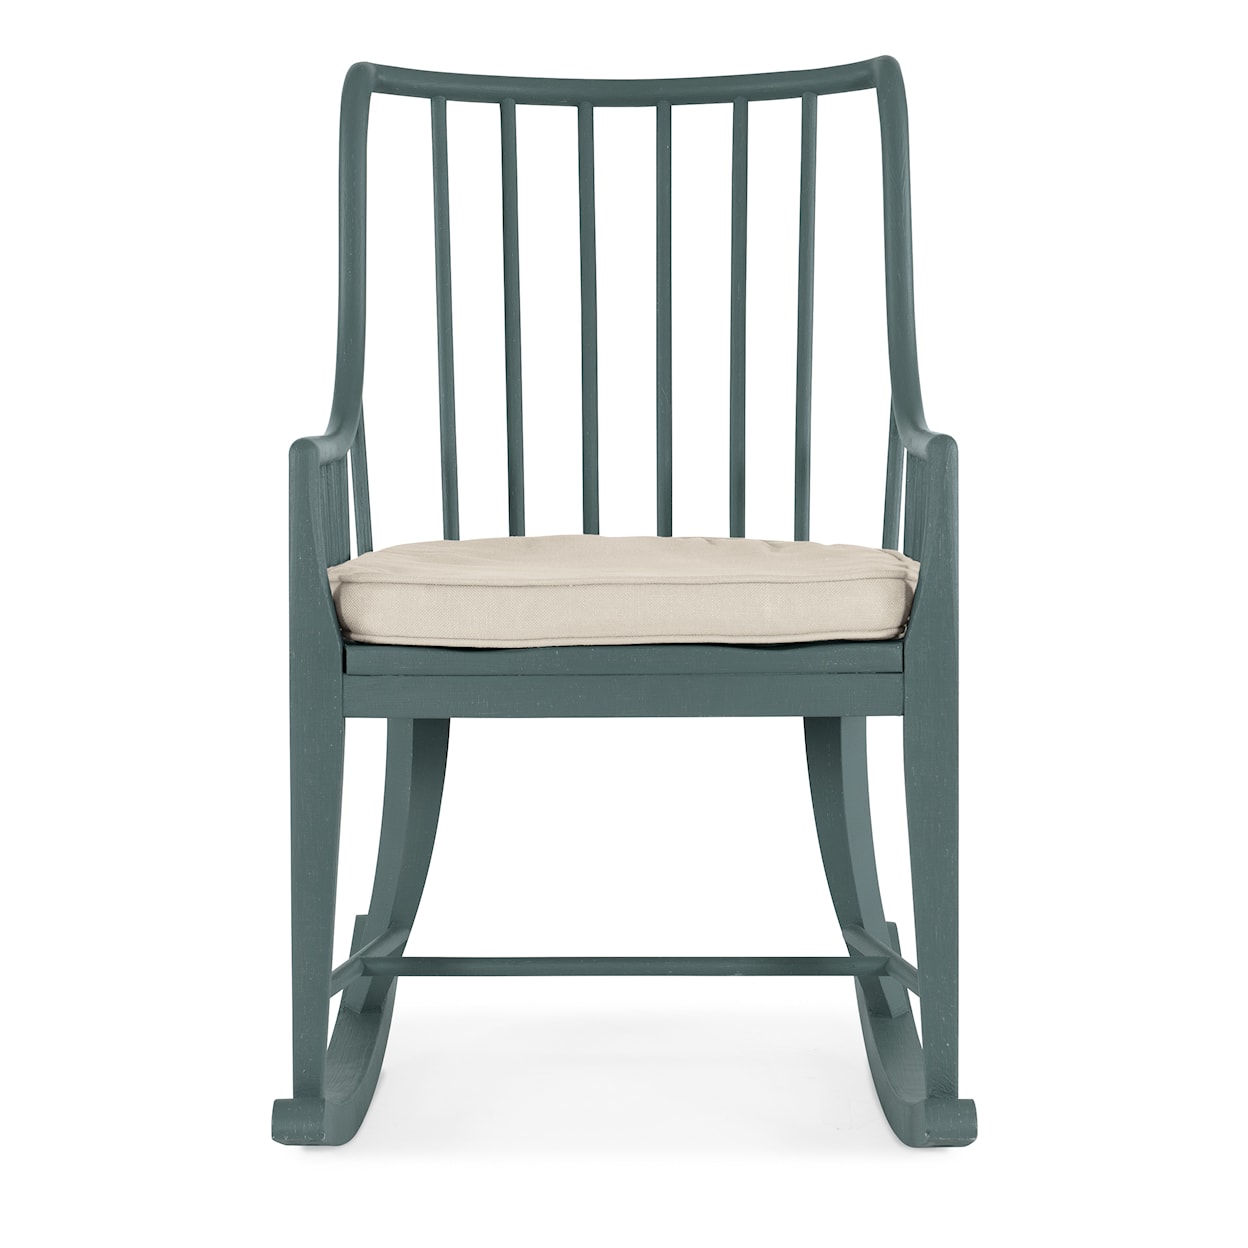 Hooker Furniture Serenity Rocking Chair